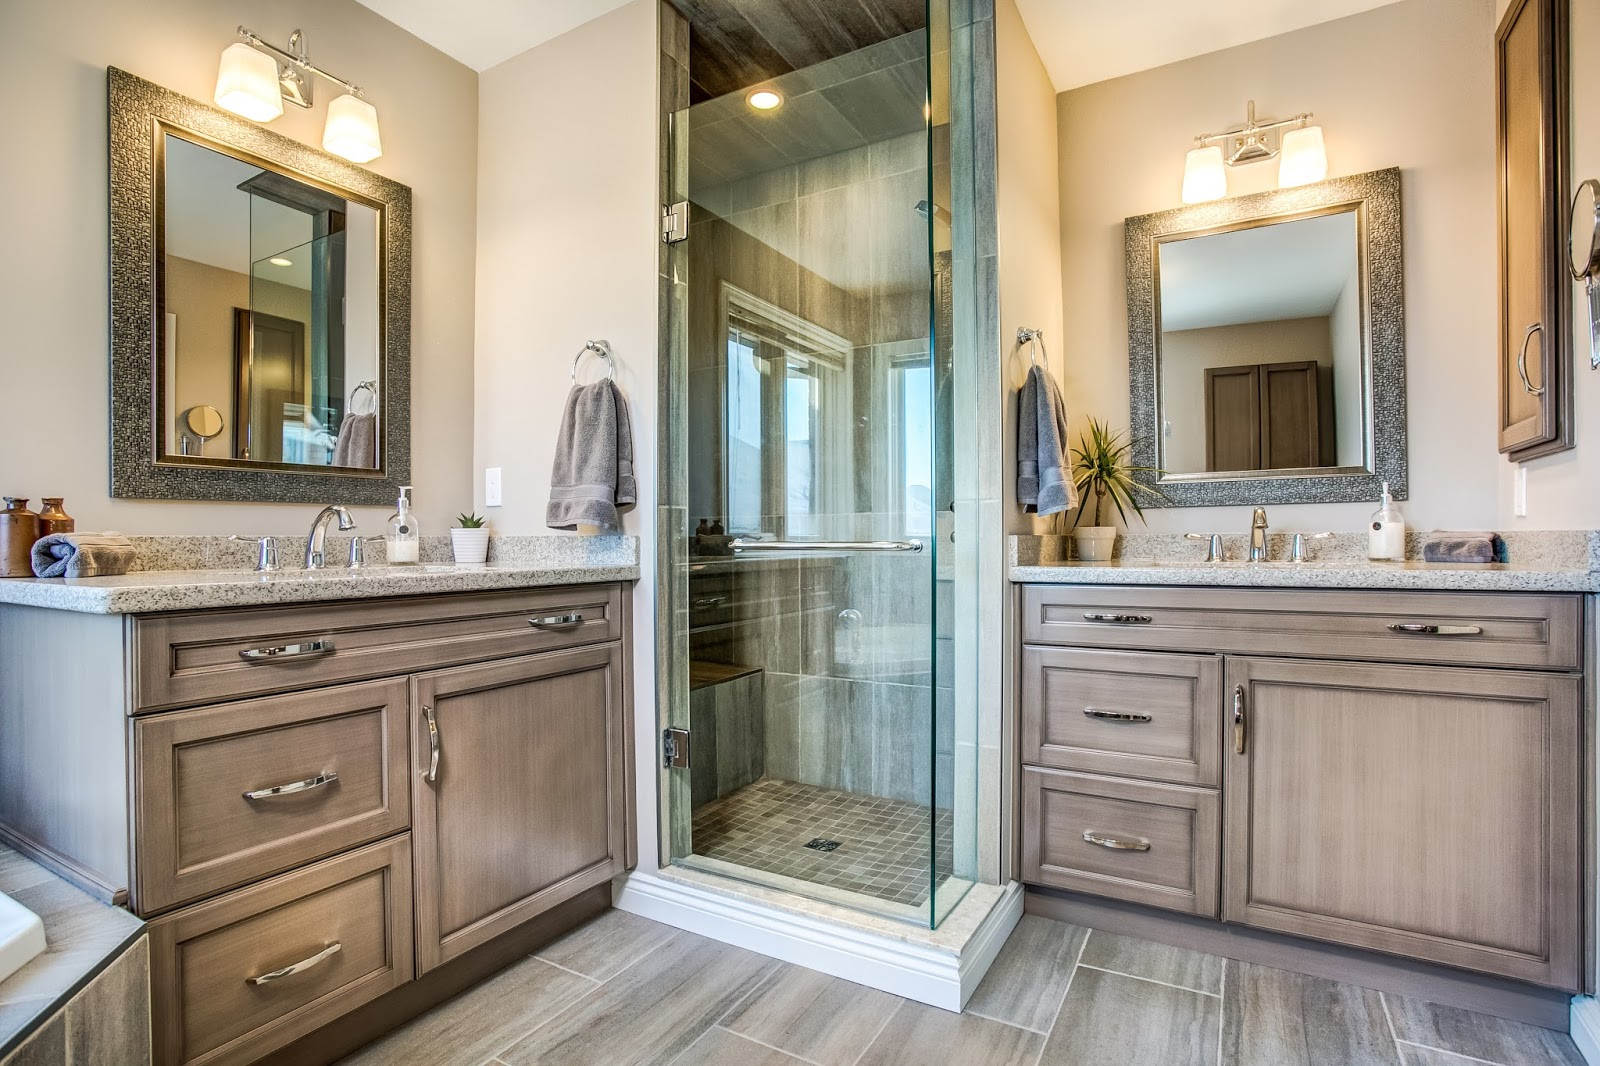 Cost Of Remodeling A Bathroom
 Bathroom Remodel Cost in 2020 Bud Average & Luxury